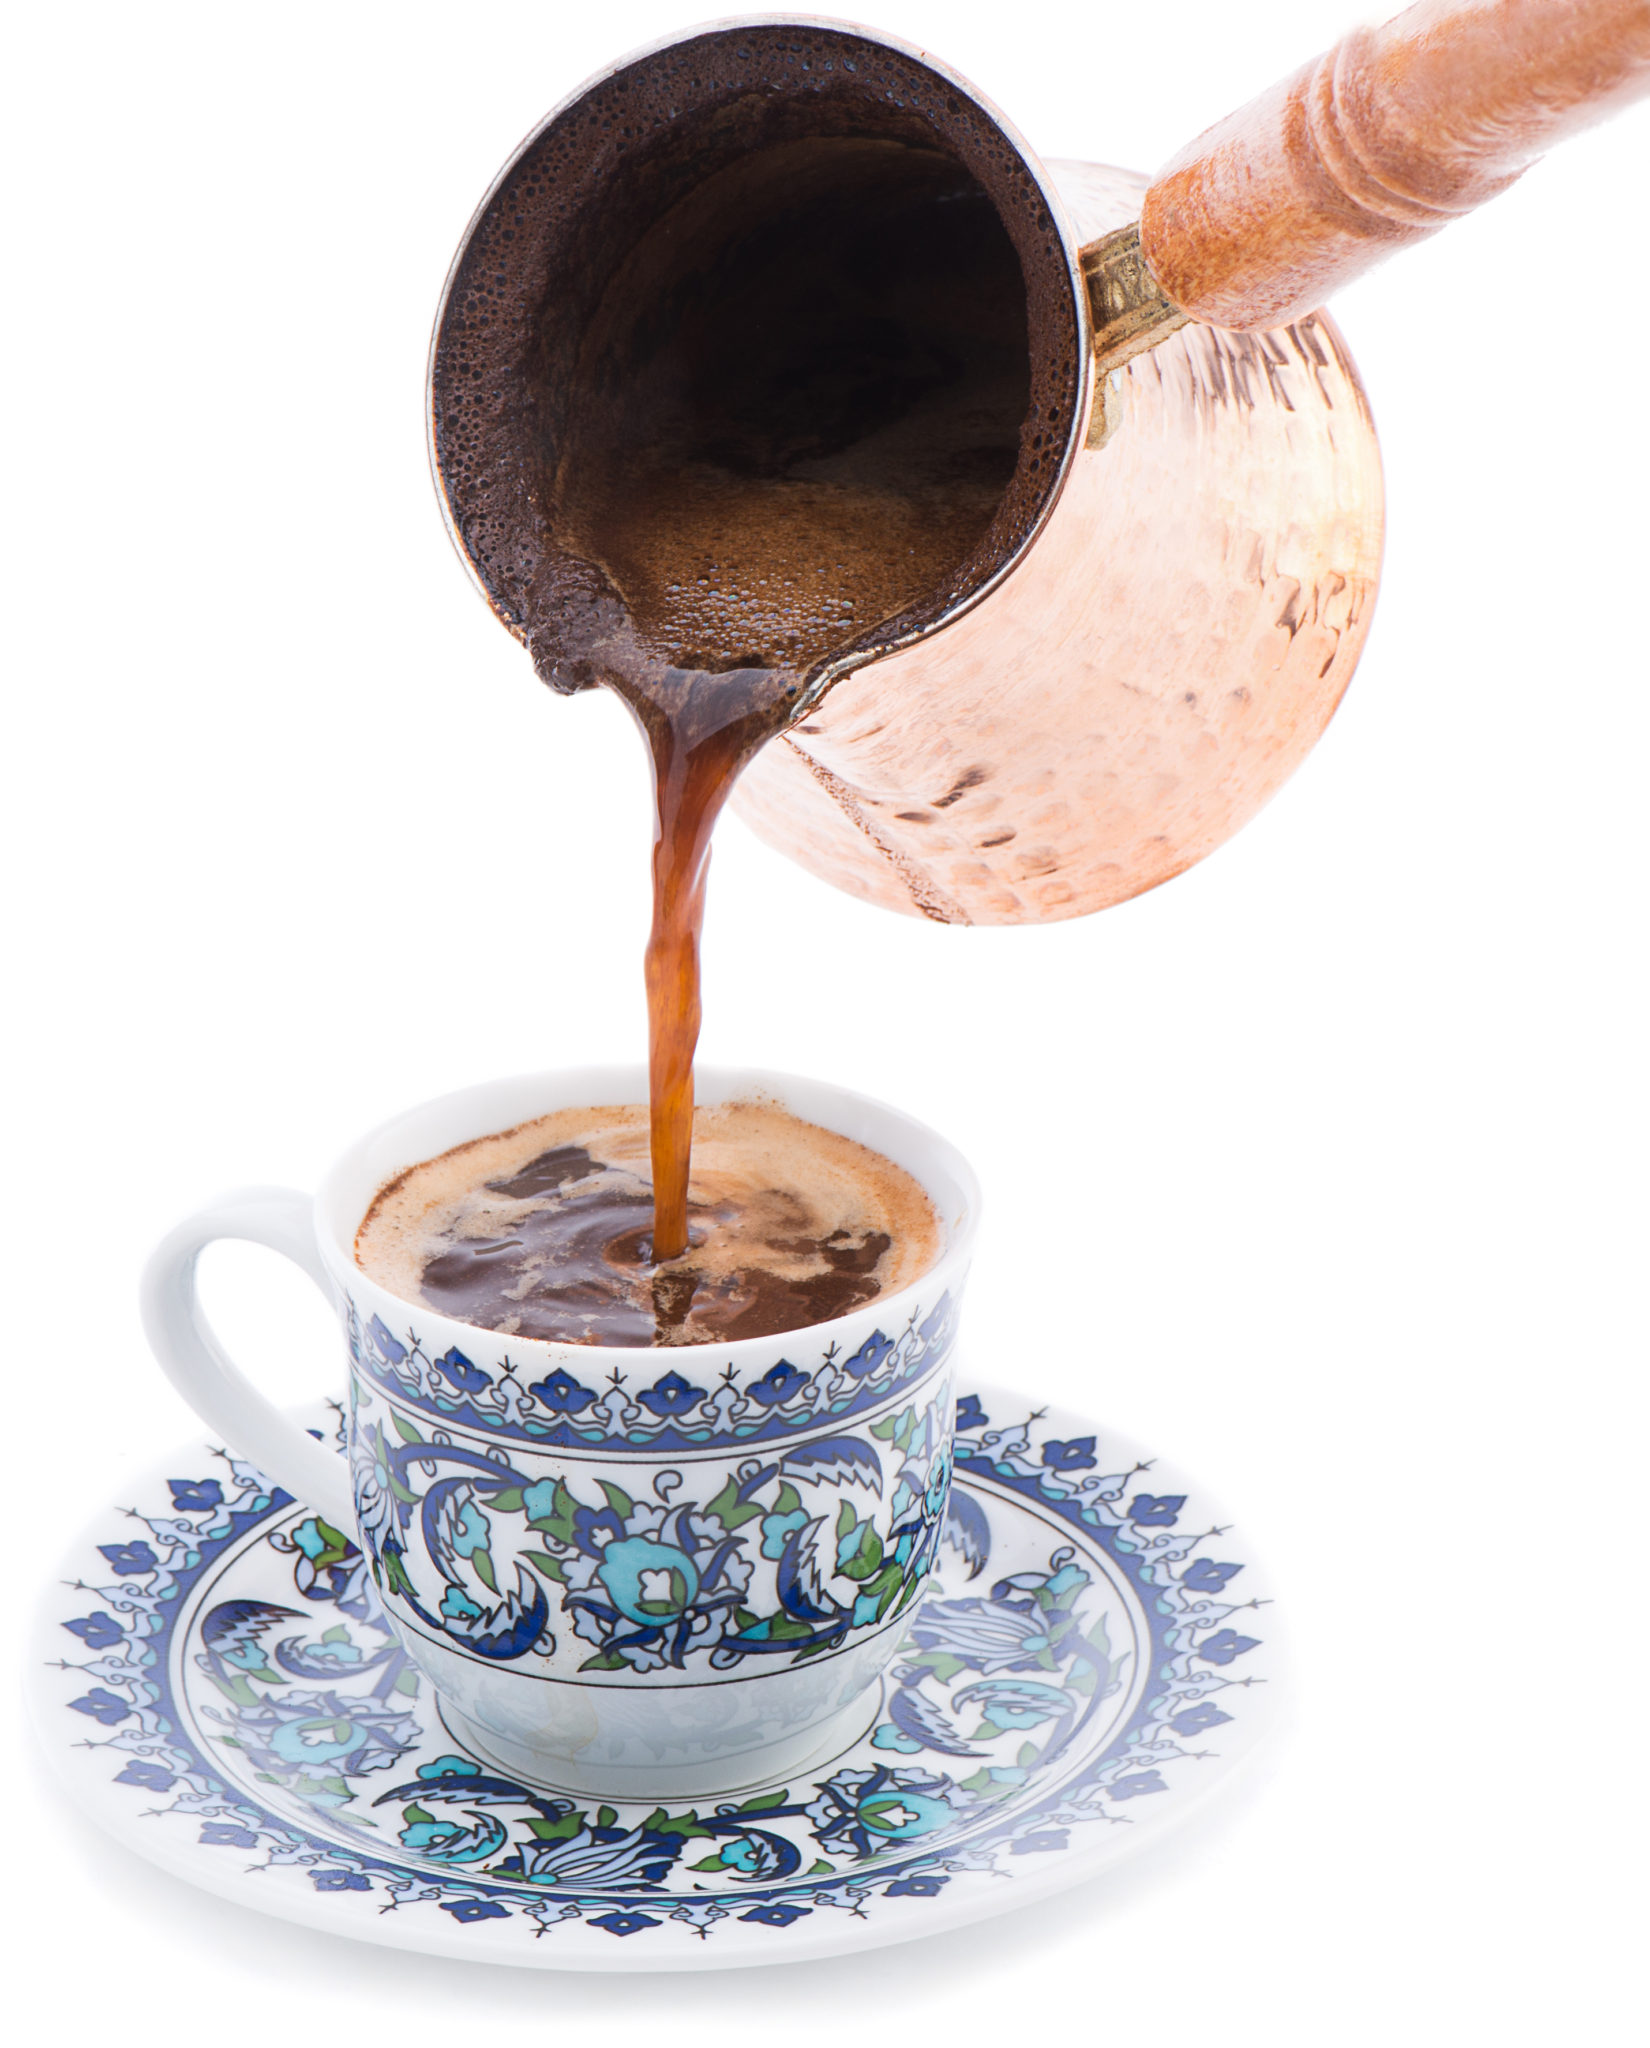 tyrkisk kaffe, kaffe fra tyrkiet, alanya kaffe, om tyrkisk kaffe, fakta om tyrkisk kaffe, kaffe fra tyrkiet, kaffe i tyrkiet